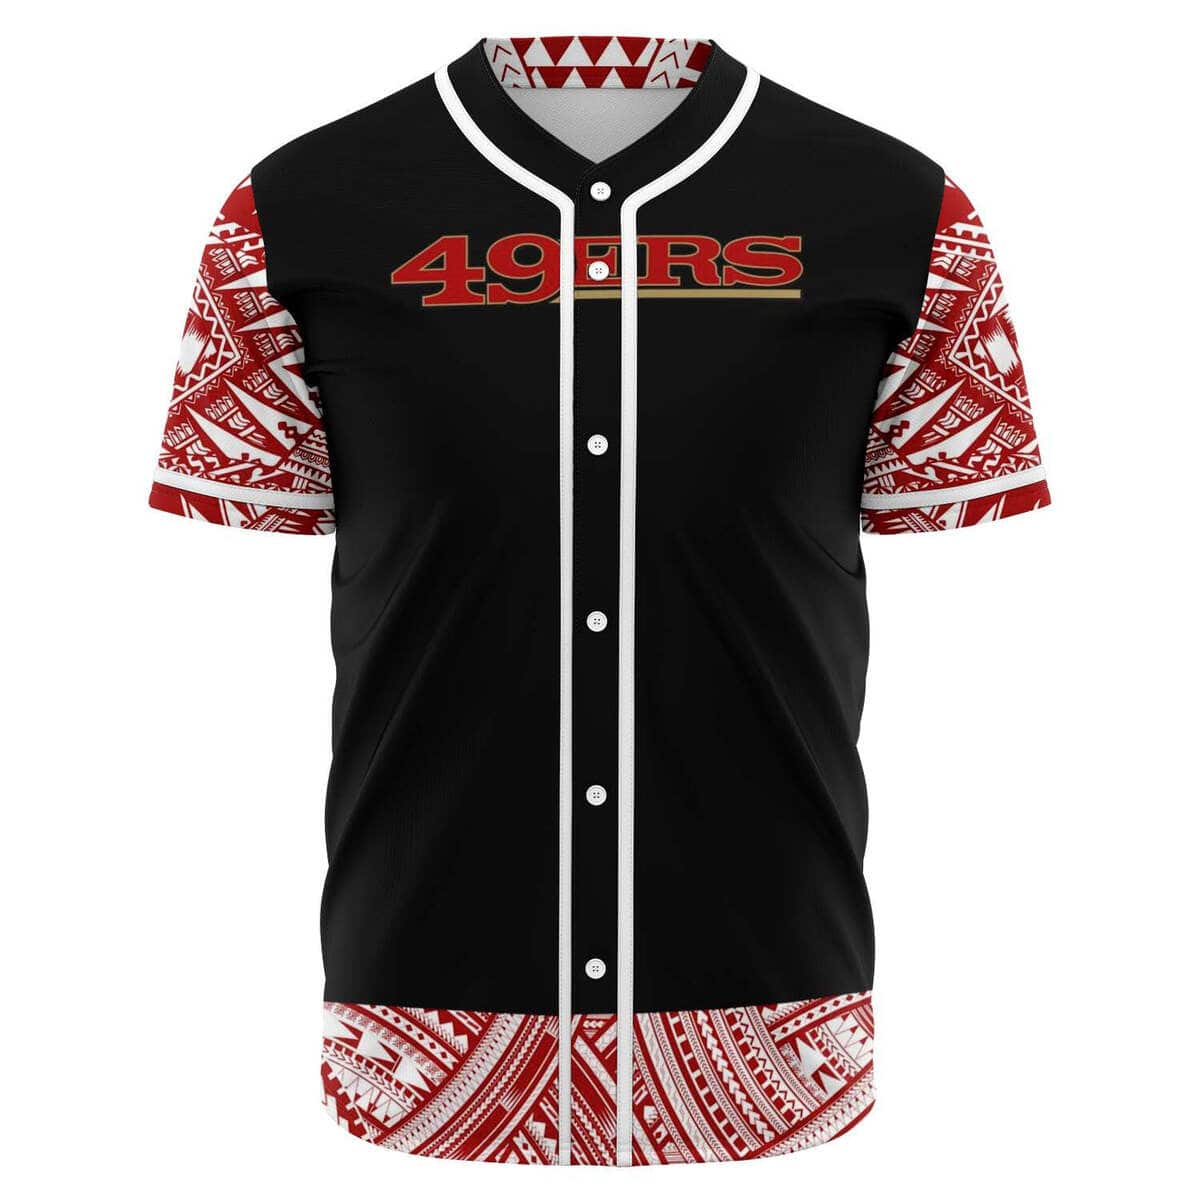 NFL San Francisco 49ers Baseball Jersey Maori Gift For Sporty Friends